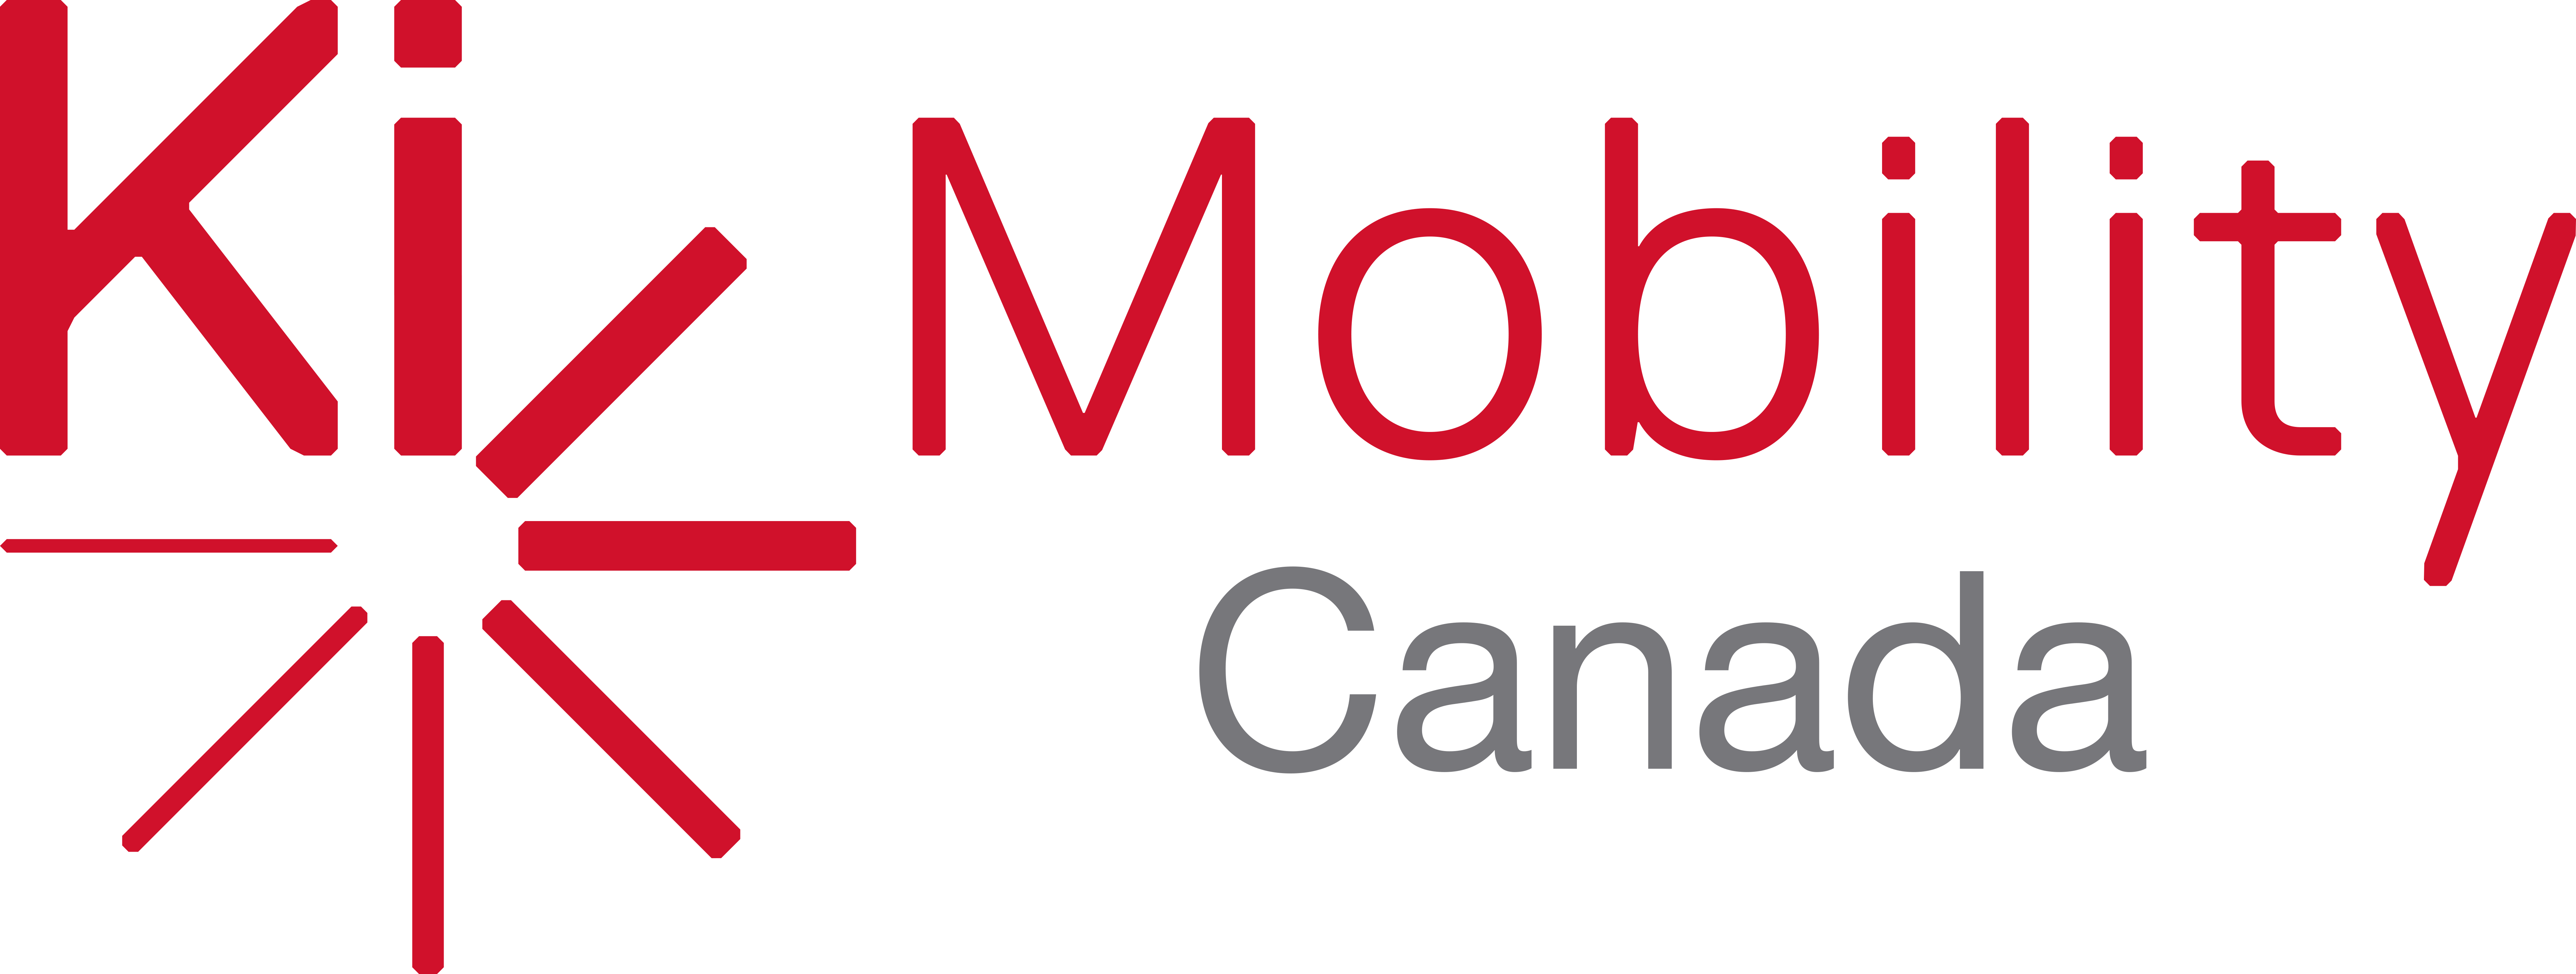 Ki Mobility Canada